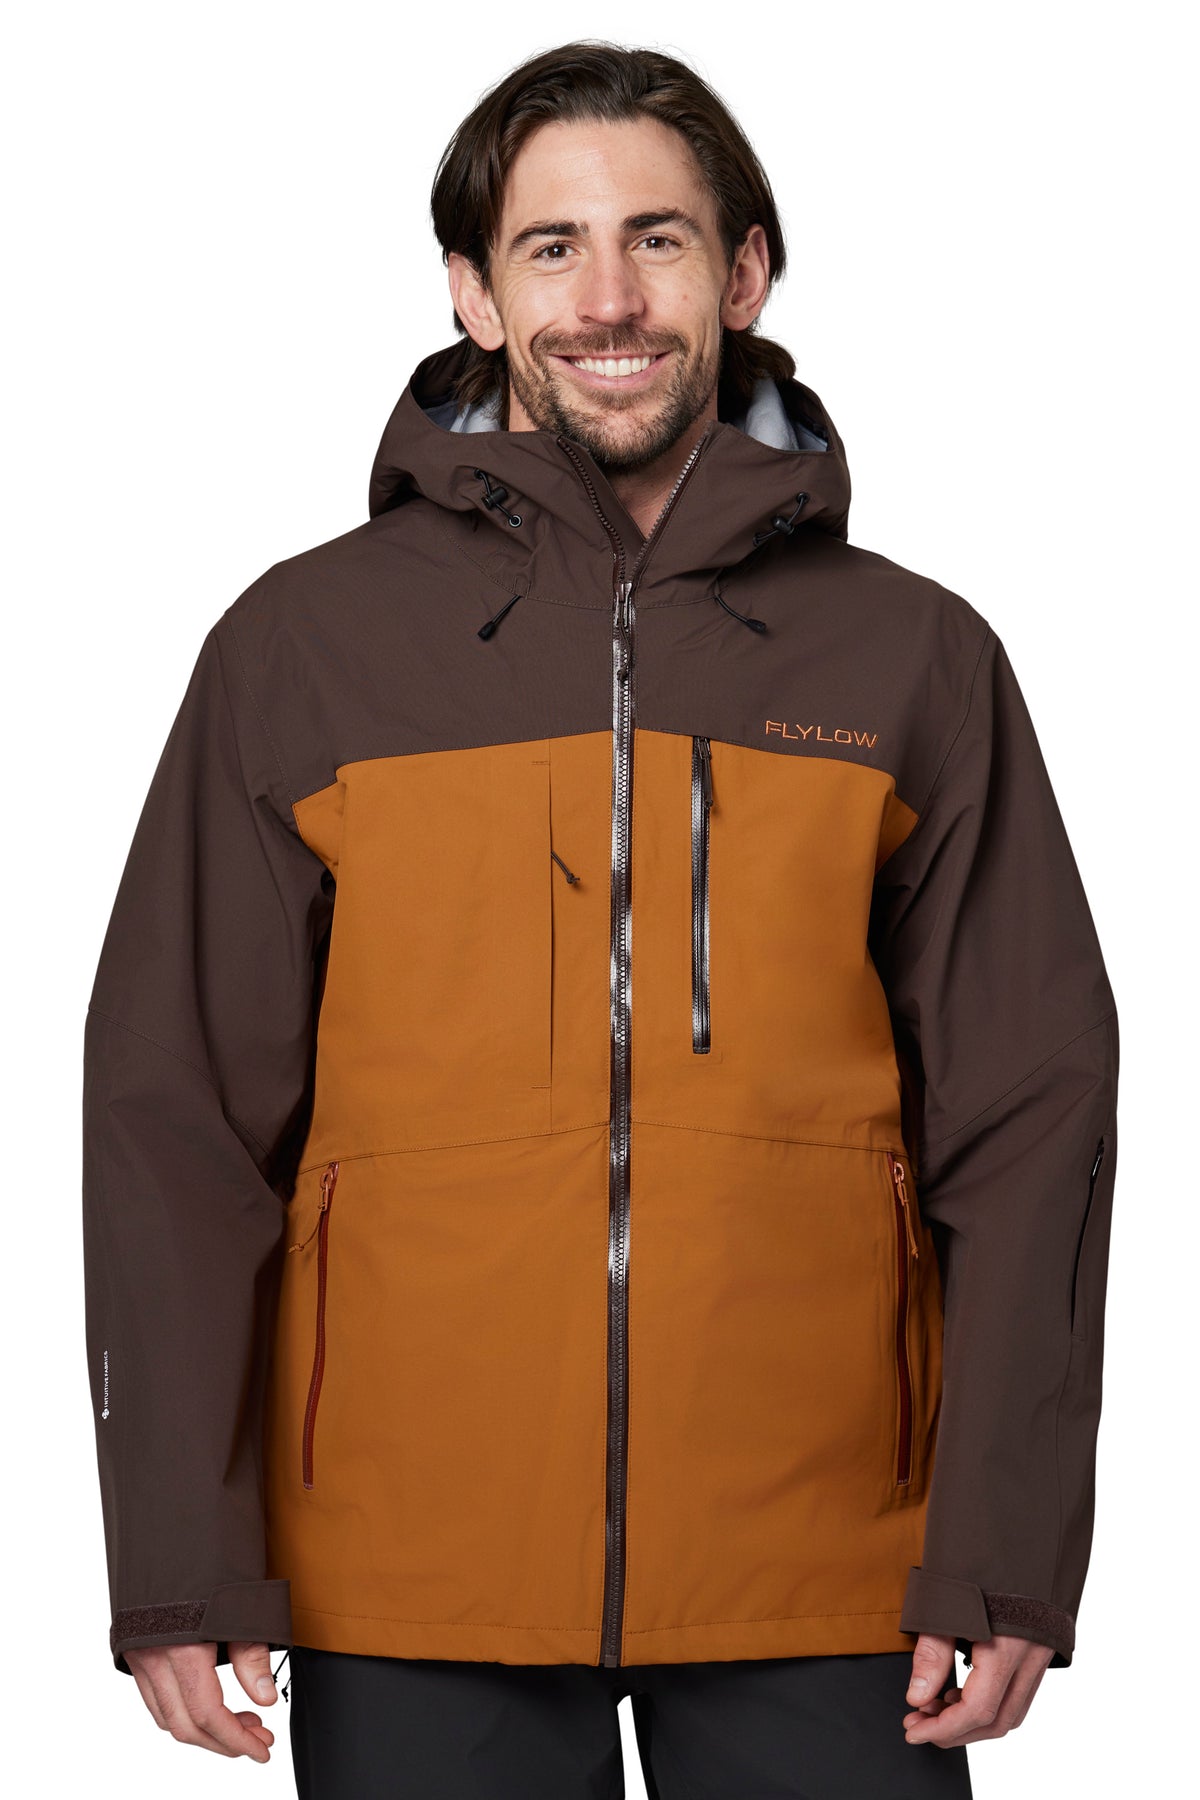 Quantum Pro Jacket - Men's Backcountry Ski Jacket